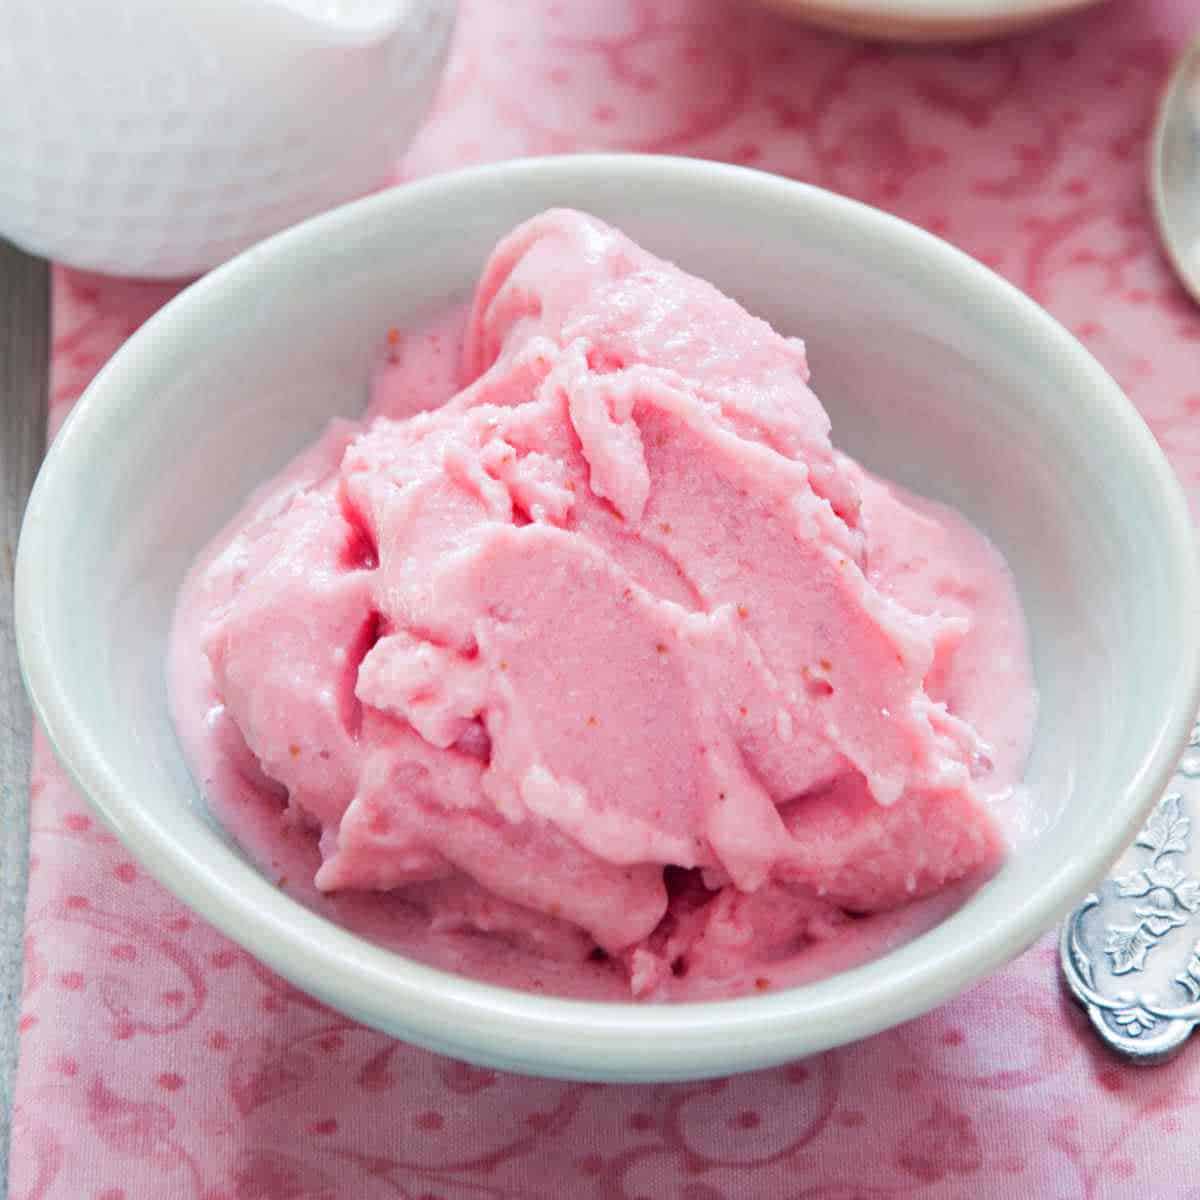 Homemade frozen yogurt in a white bowl.